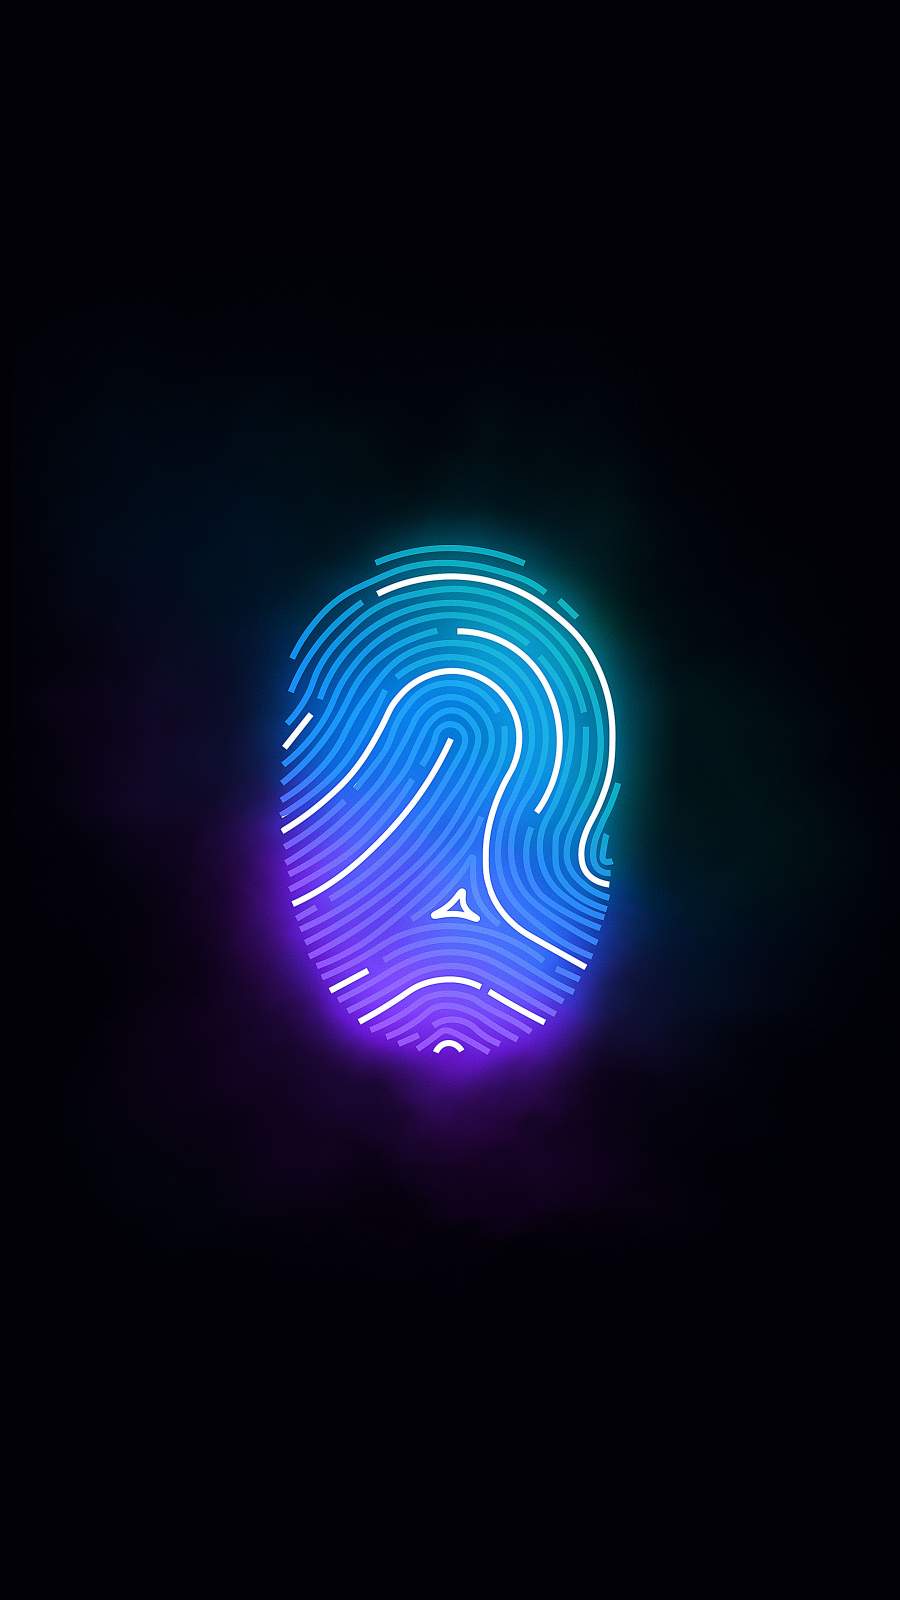 Screen Fingerprint 2 wave unlock particle motion glow fingerprint   Fingerprint Galaxy phone wallpaper Cool optical illusions